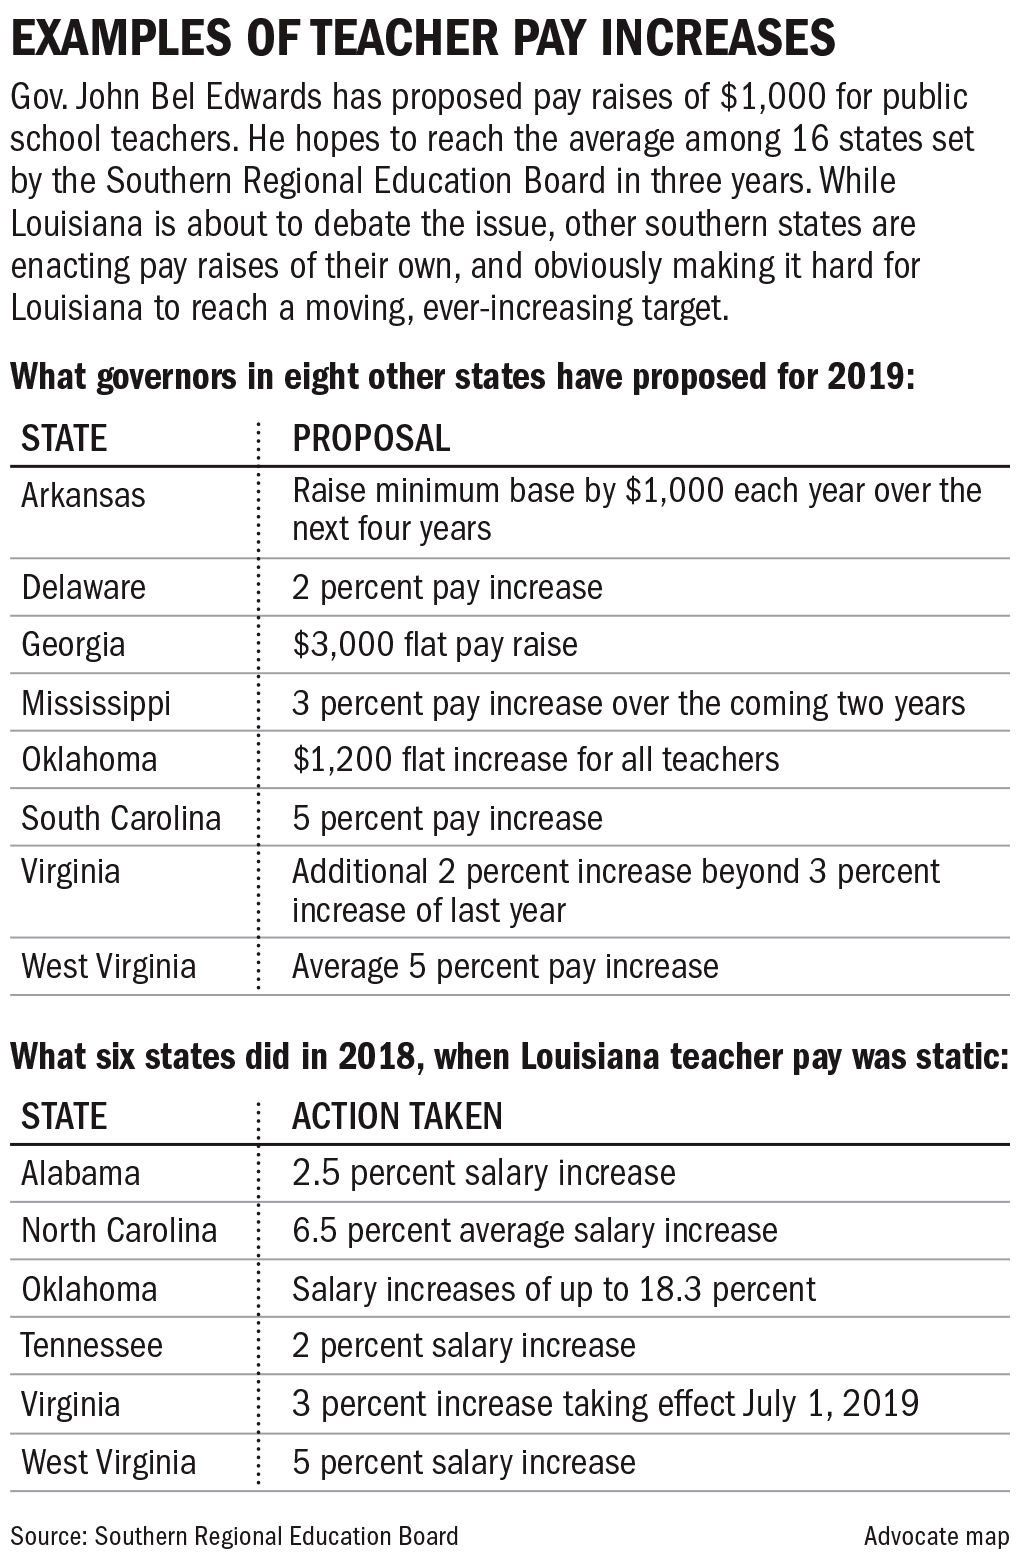 Latest hurdle for Louisiana teacher pay raises? Other states raising